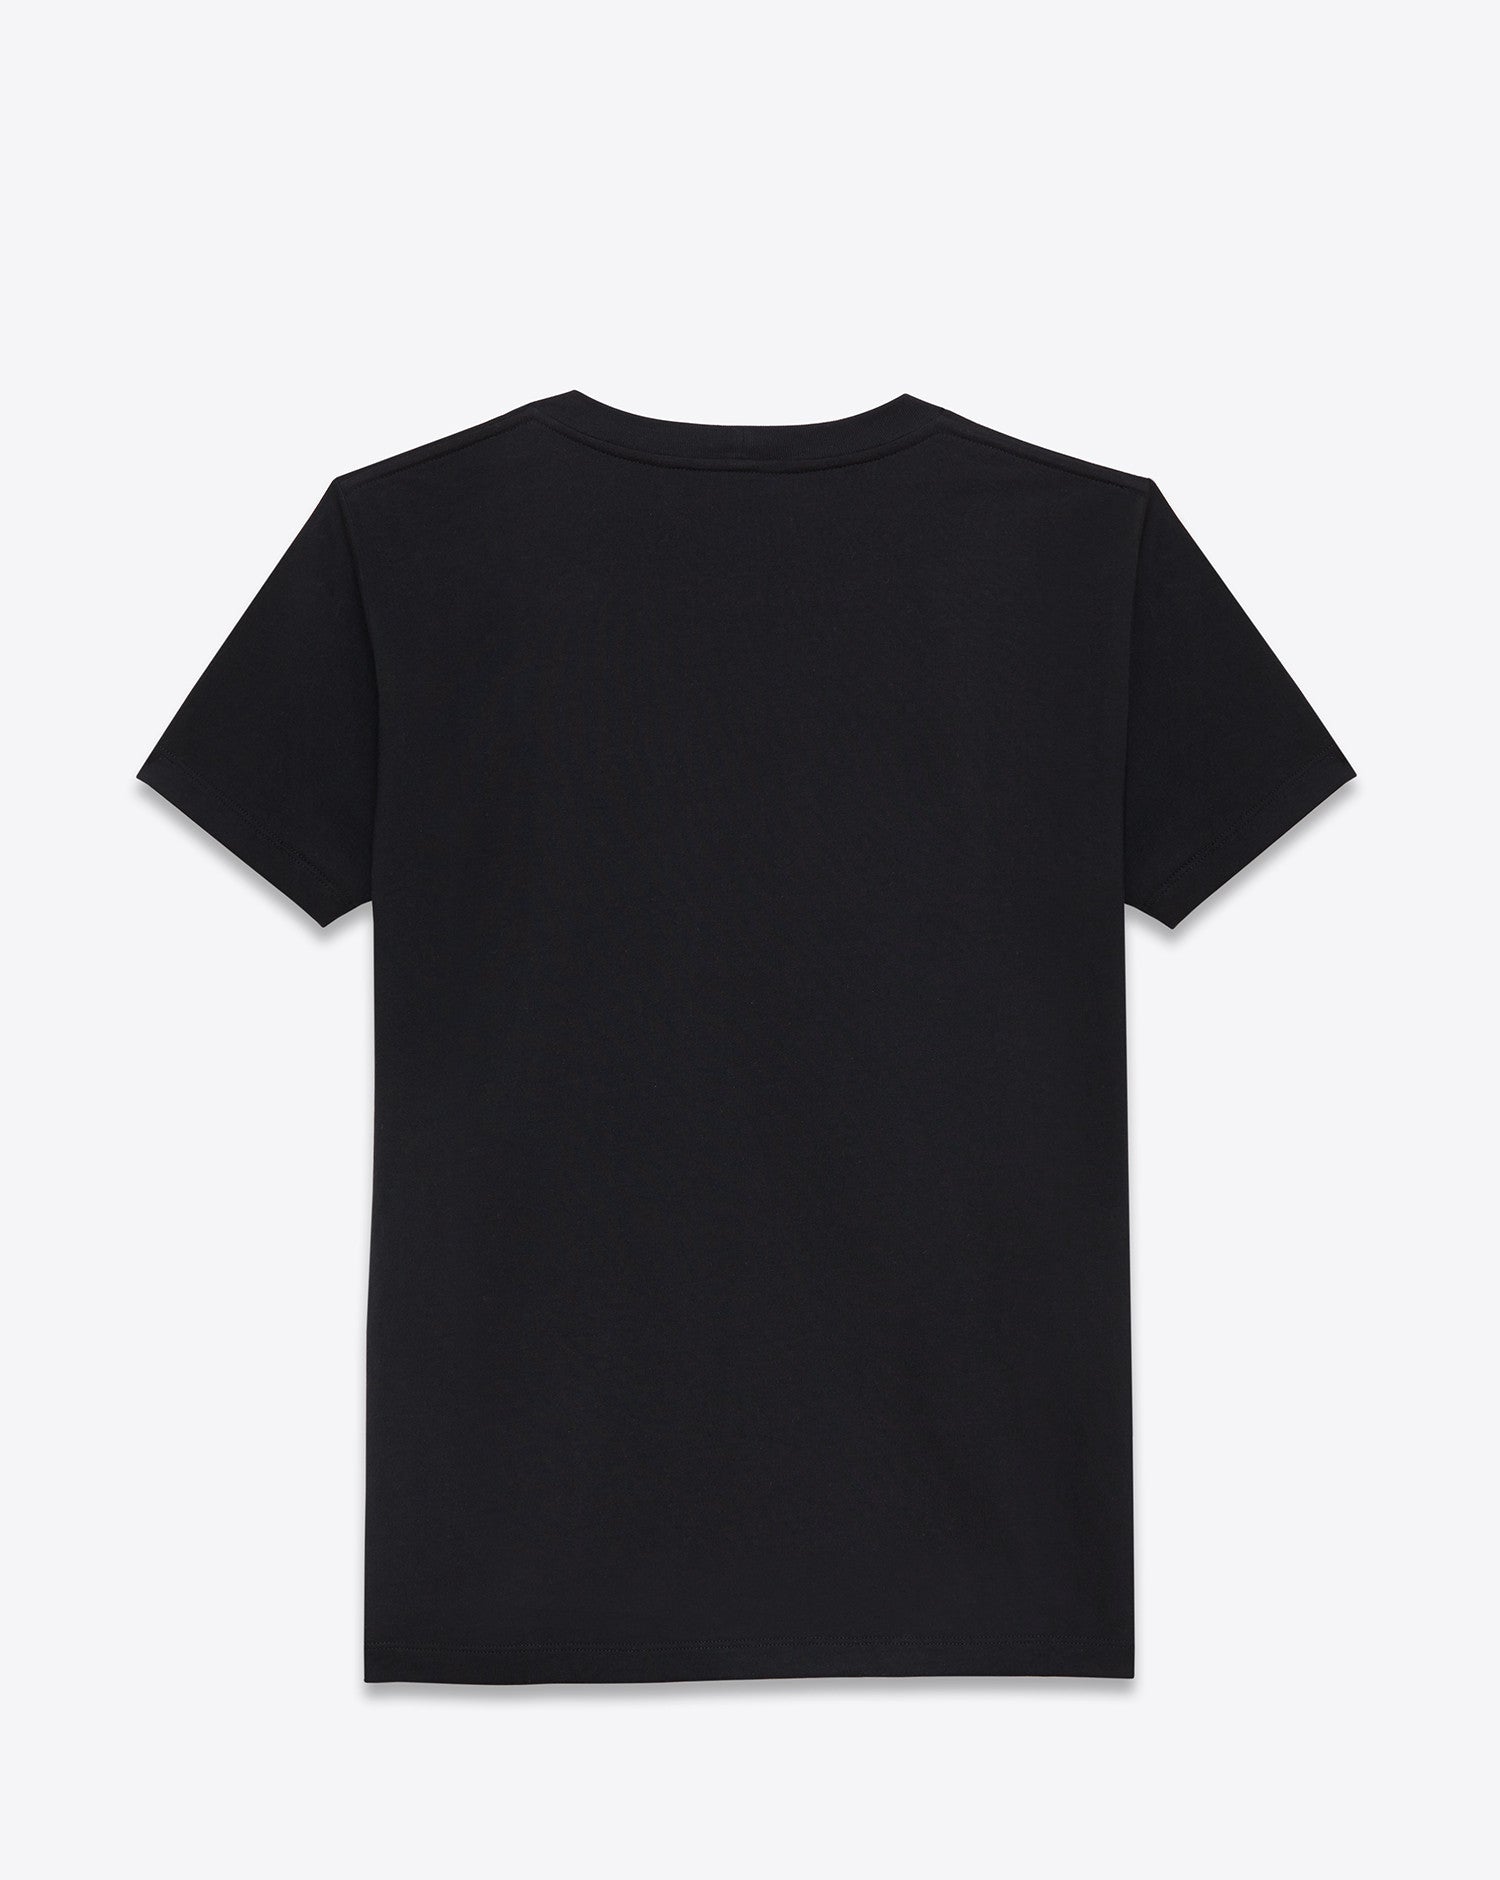 Codeine Crazy T-Shirt Black - DEMEANOIR - 1